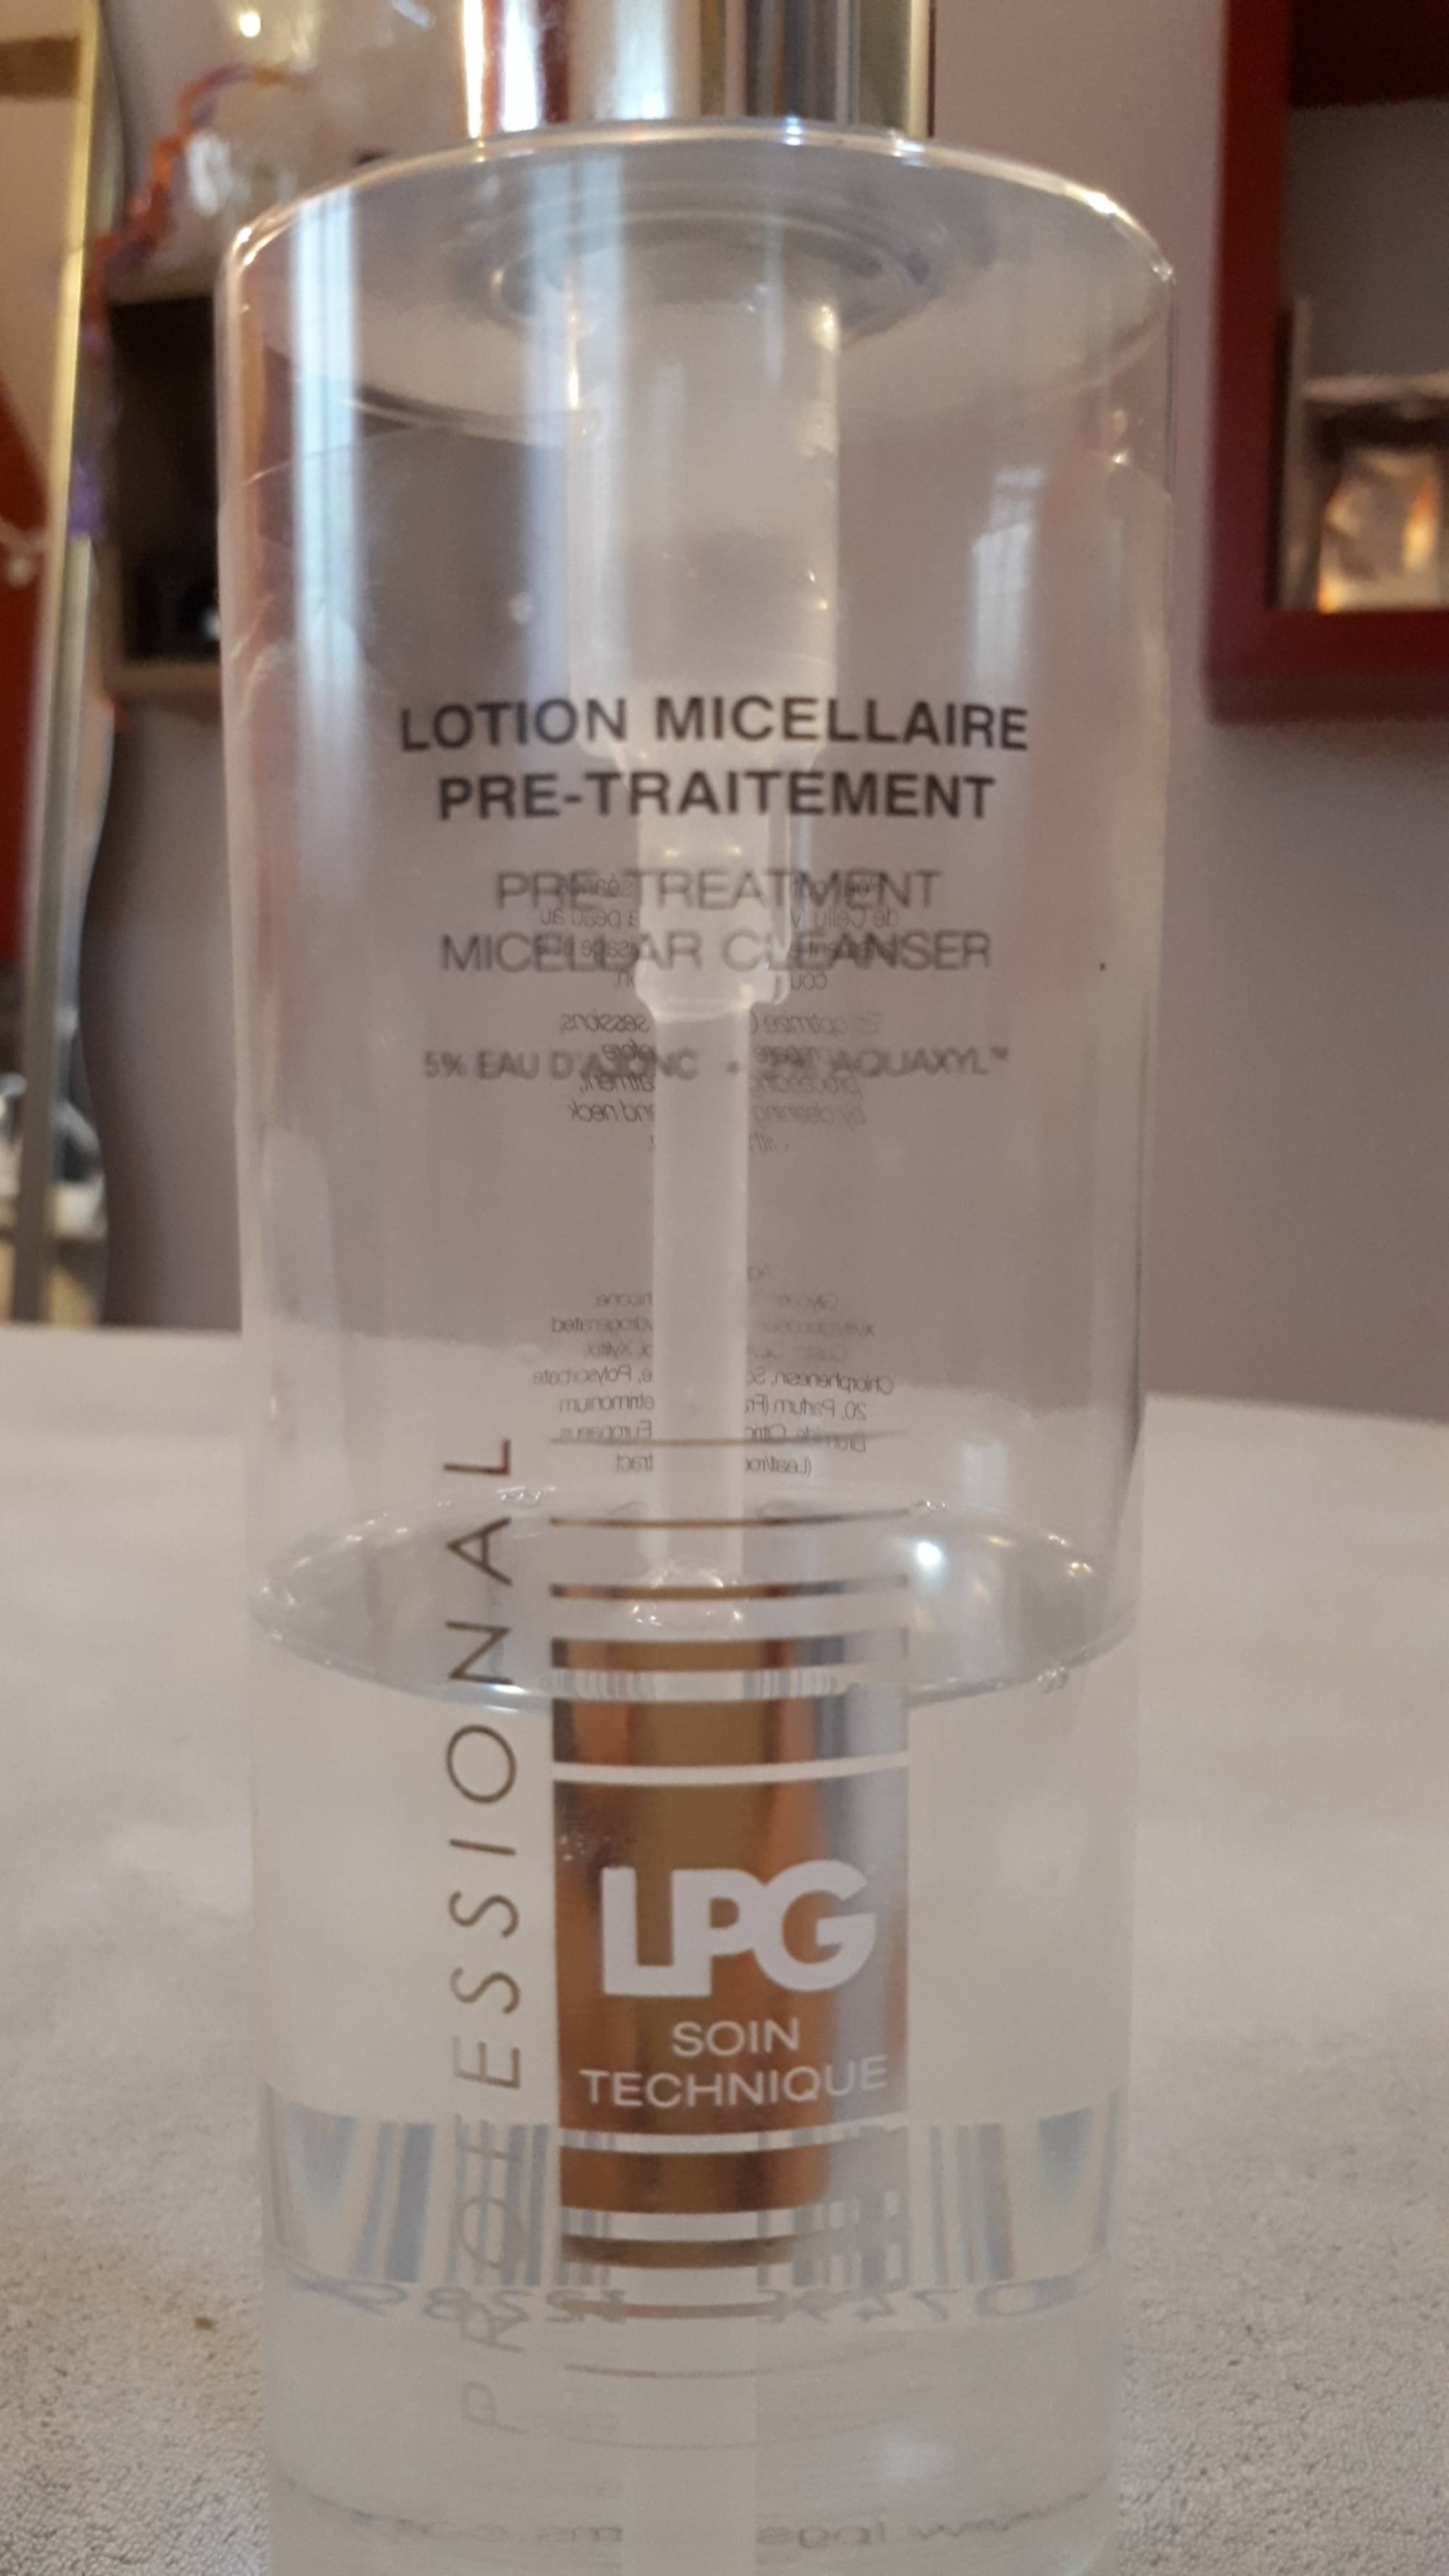 LPG - Lotion micellaire pre-traitement